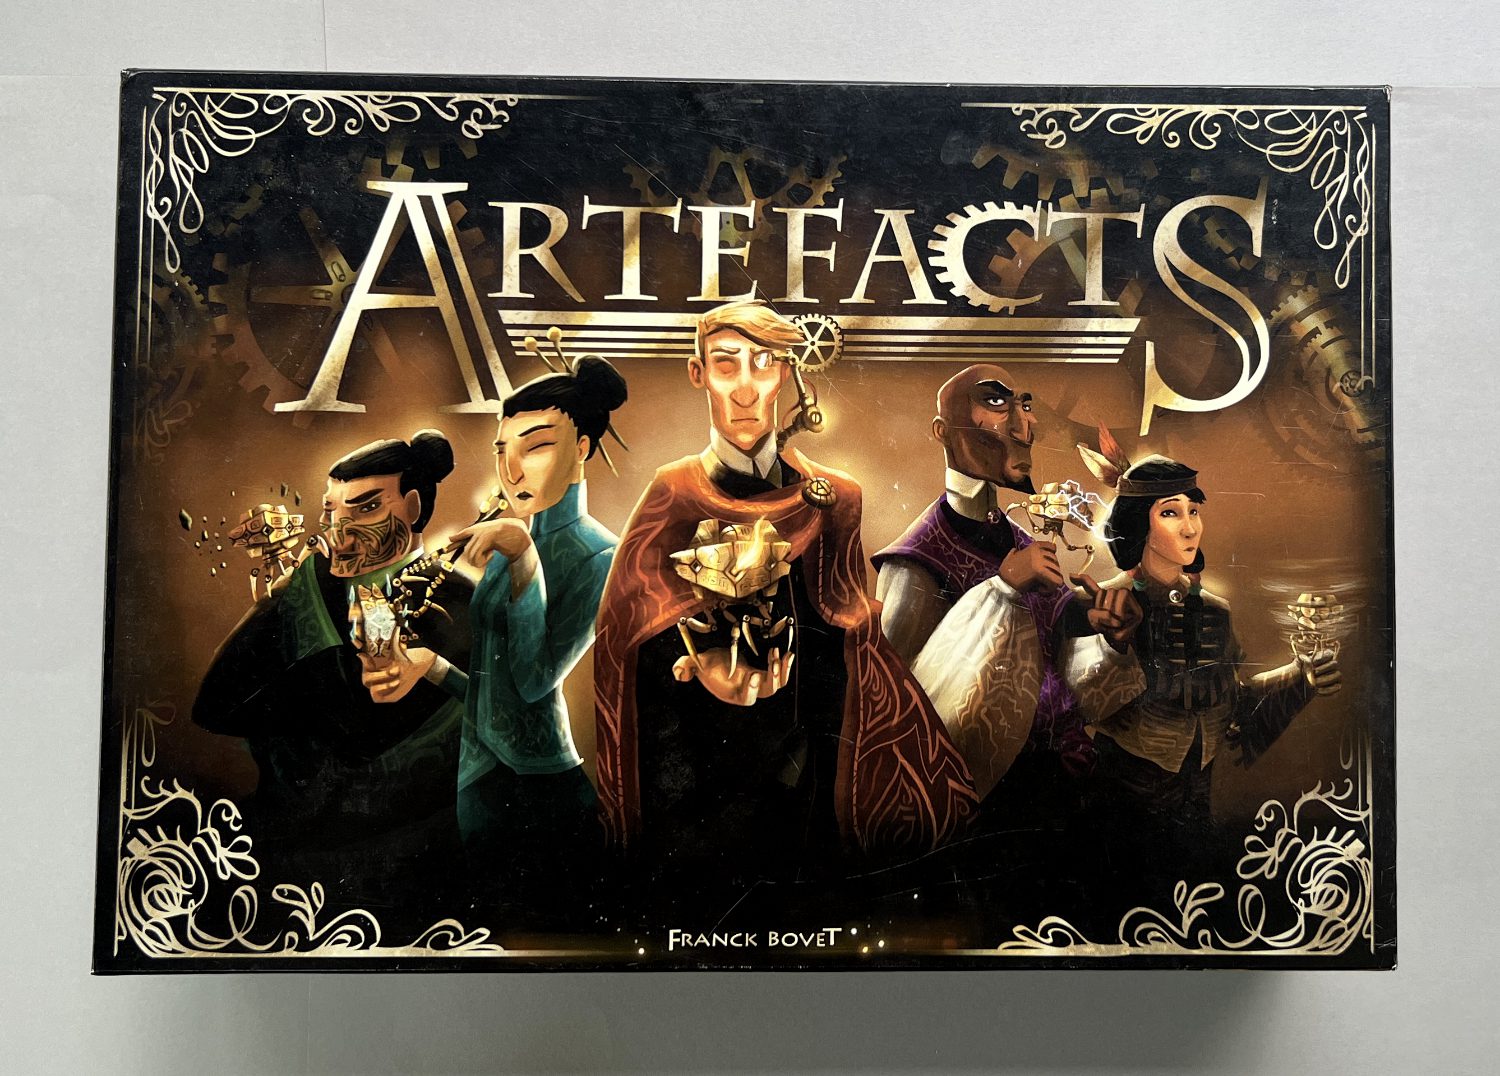 Artefacts: The box artwork